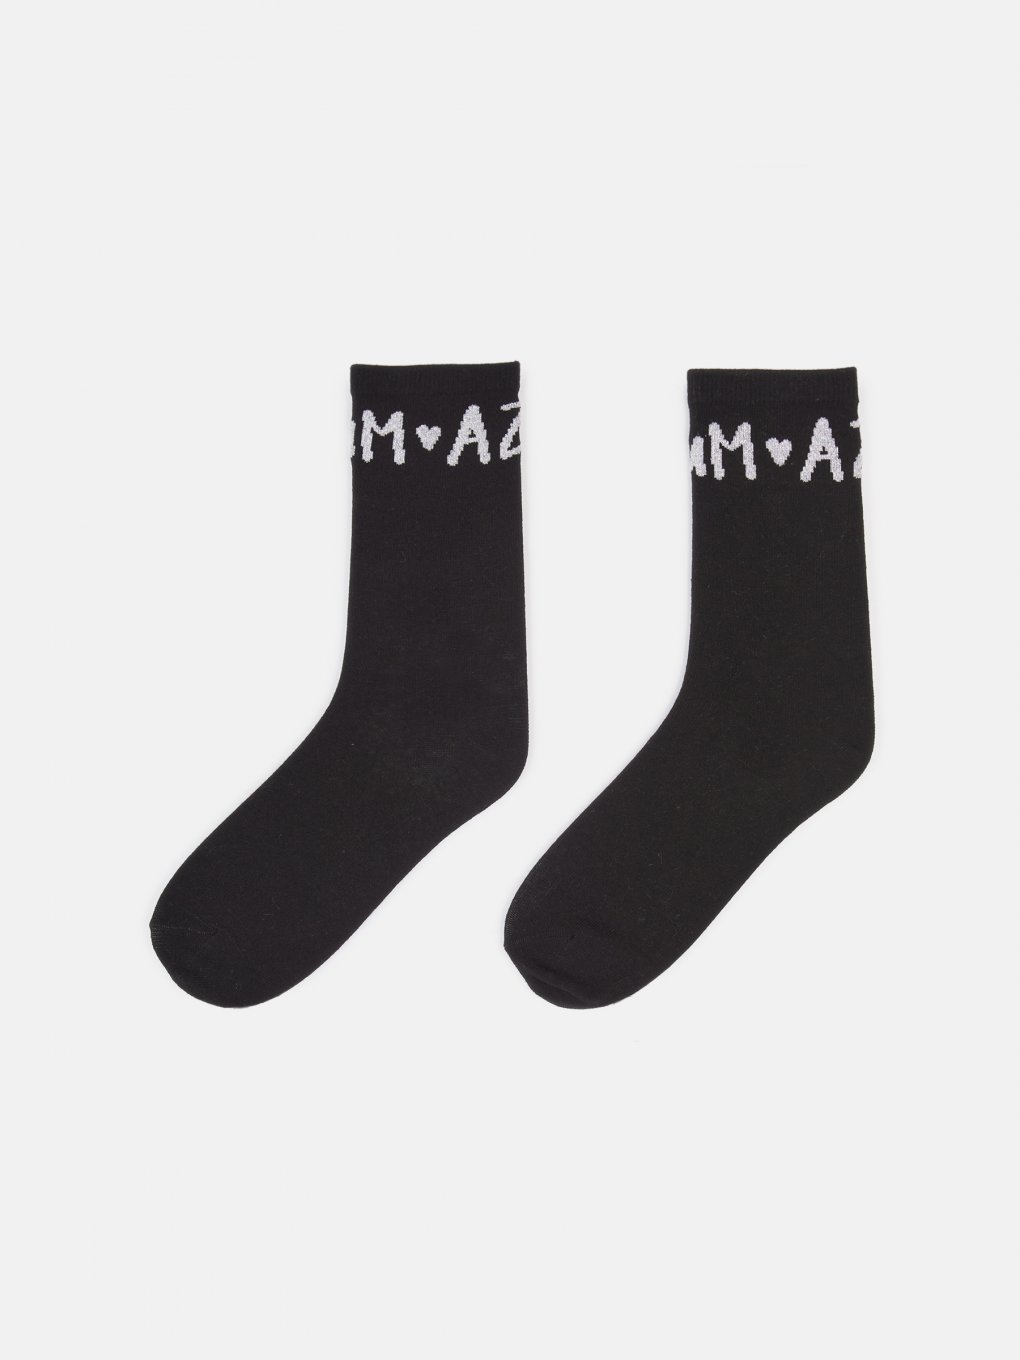 Slogan crew socks